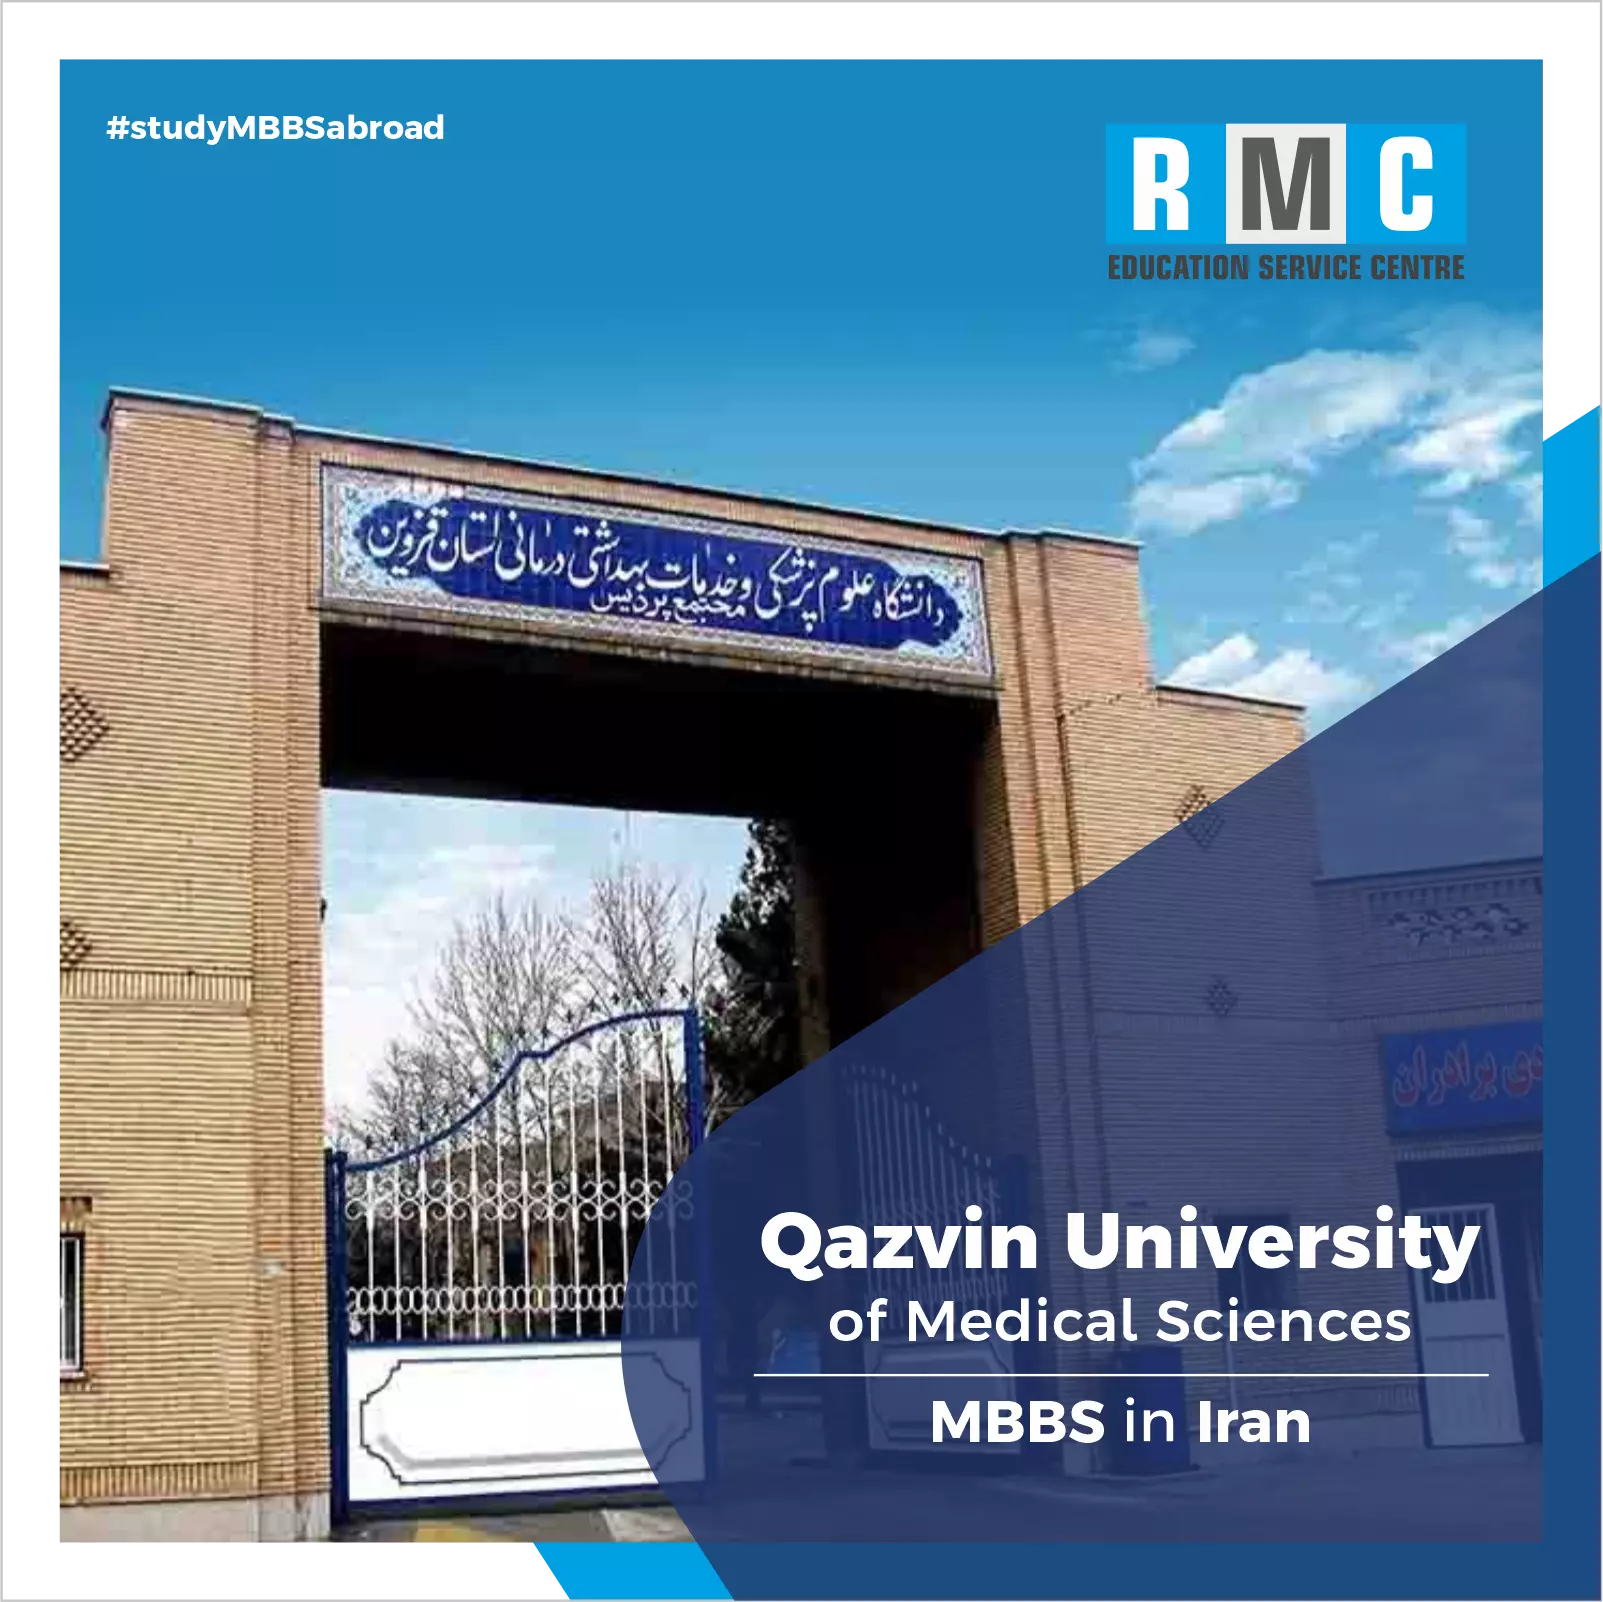 Qazvin University of Medical Sciences
